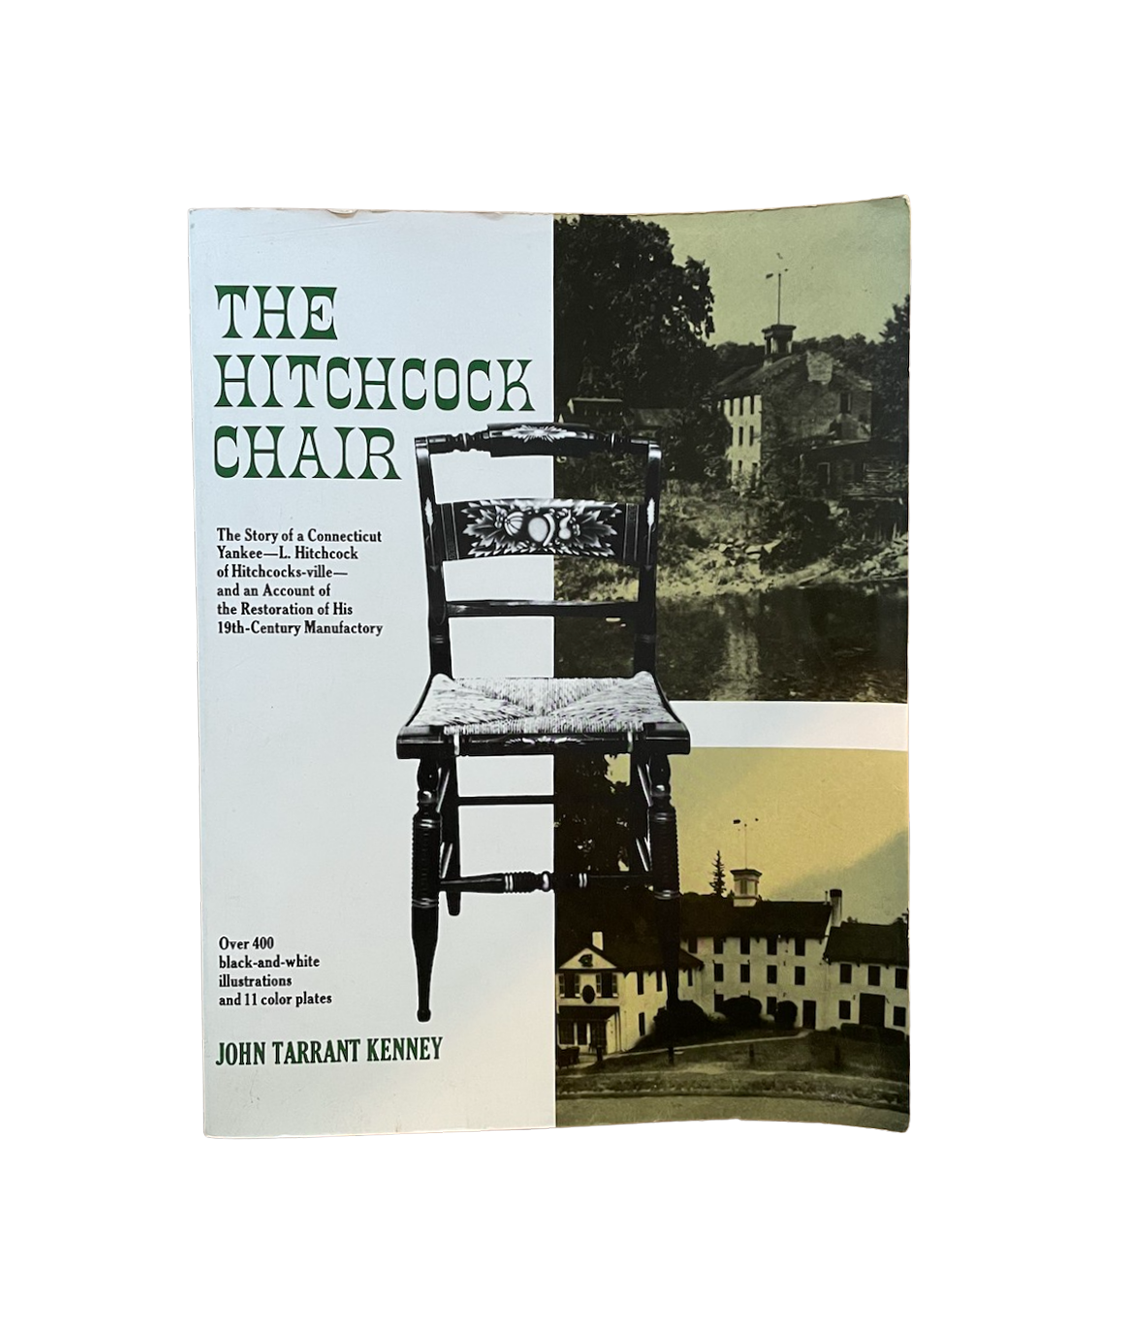 hitchcock chair